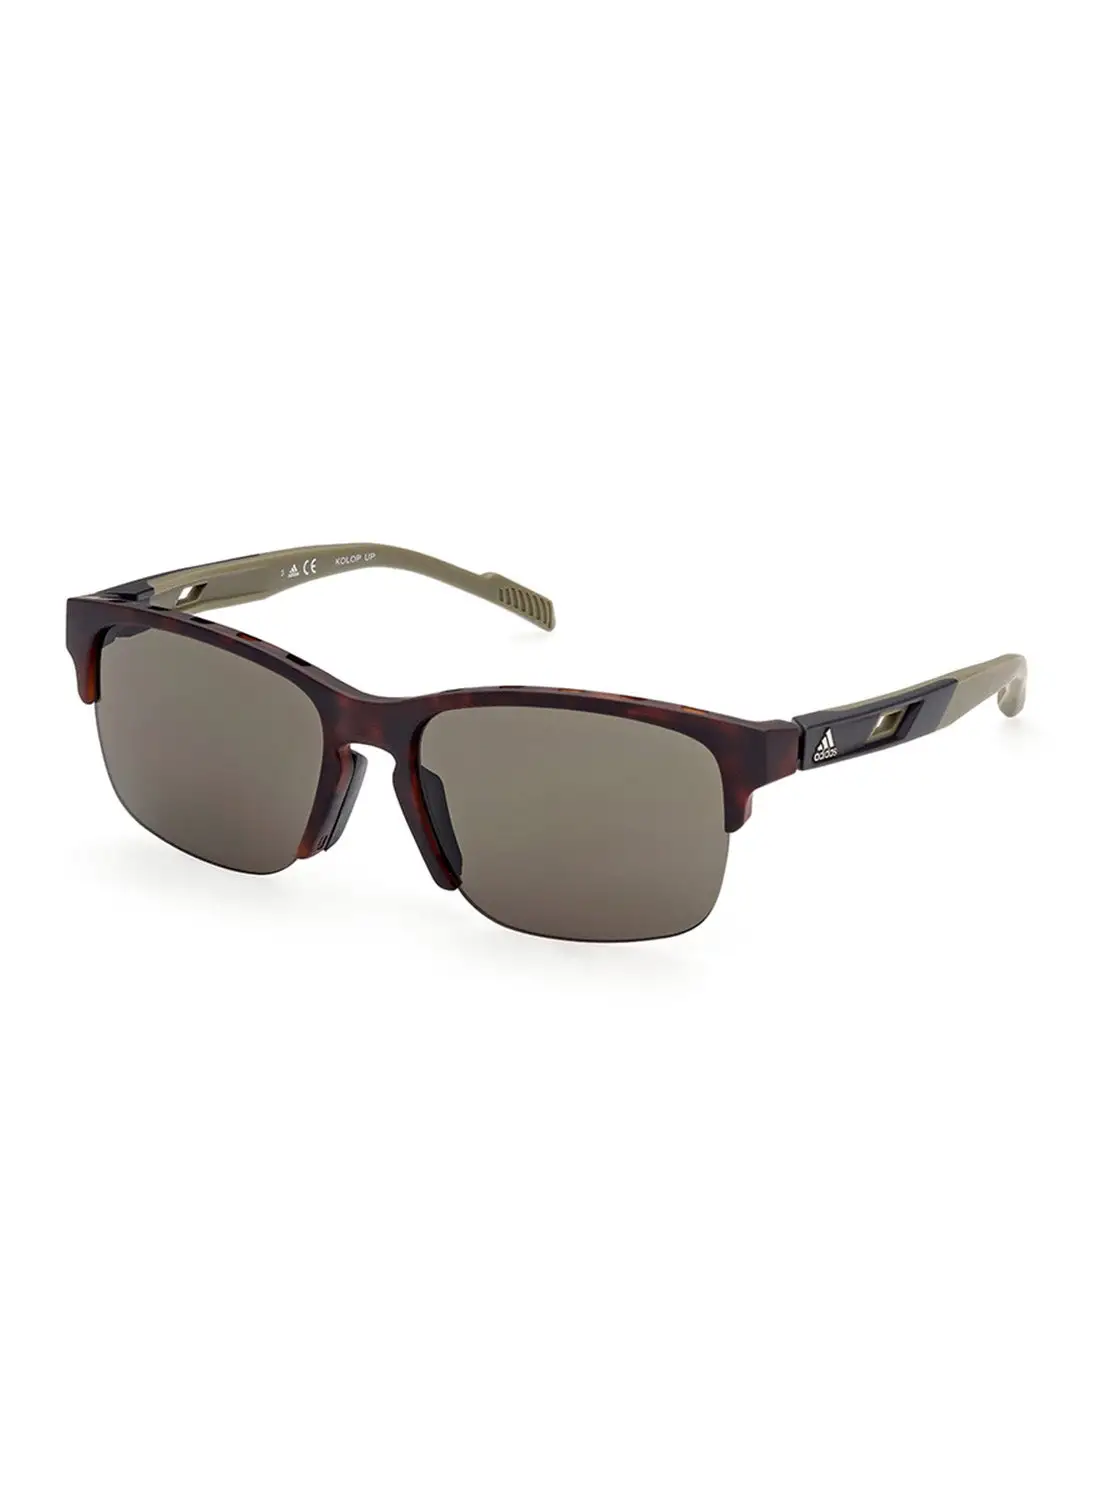 Adidas Unisex UV Protection Navigator Shape Sunglasses - SP004852N57 - Lens Size: 57 Mm